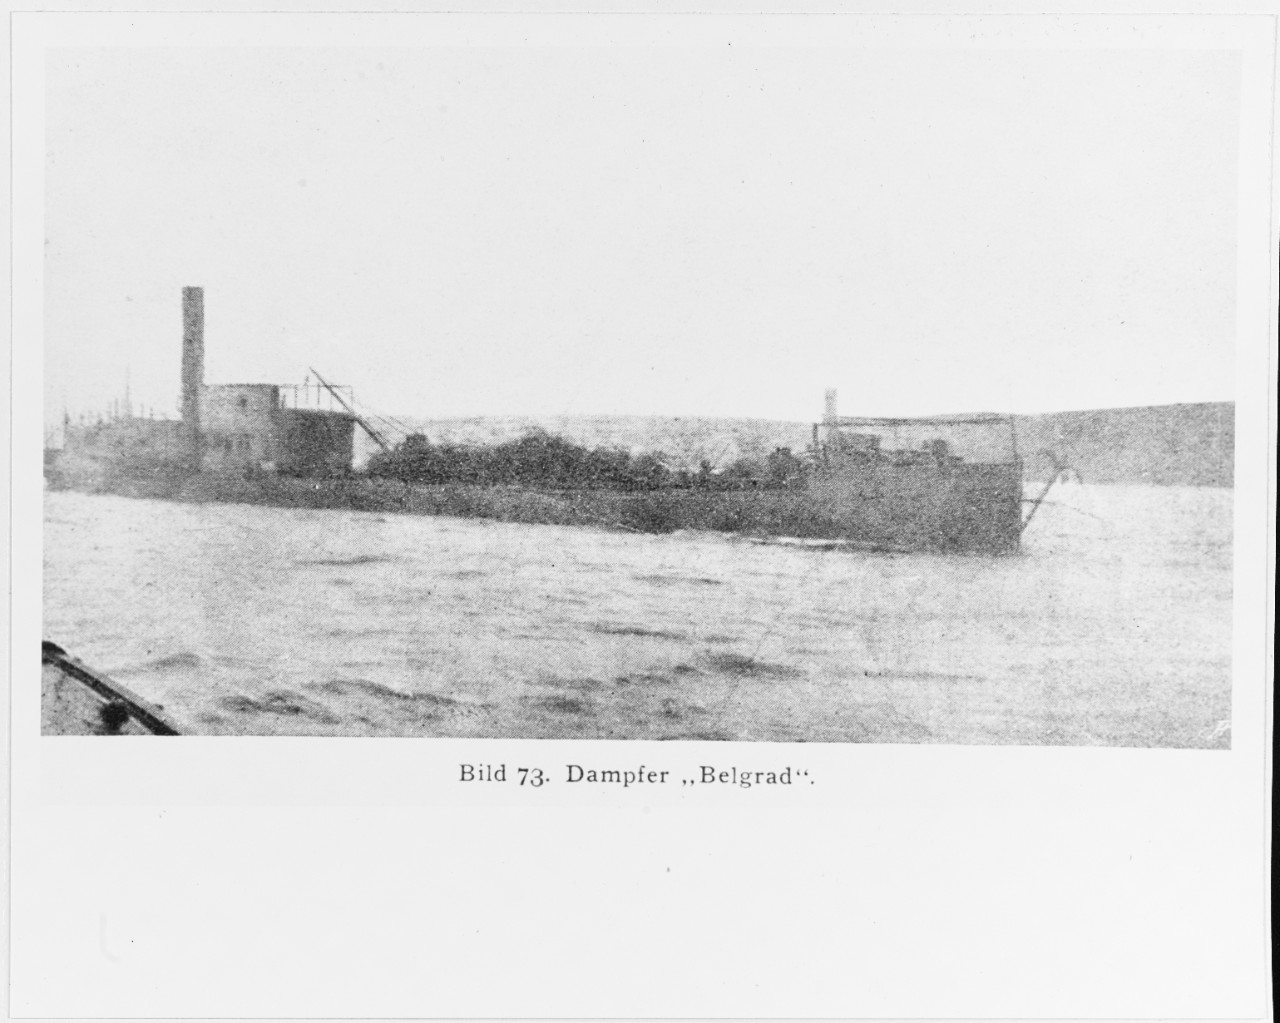 BELGRAD (Austrian River Steamer)